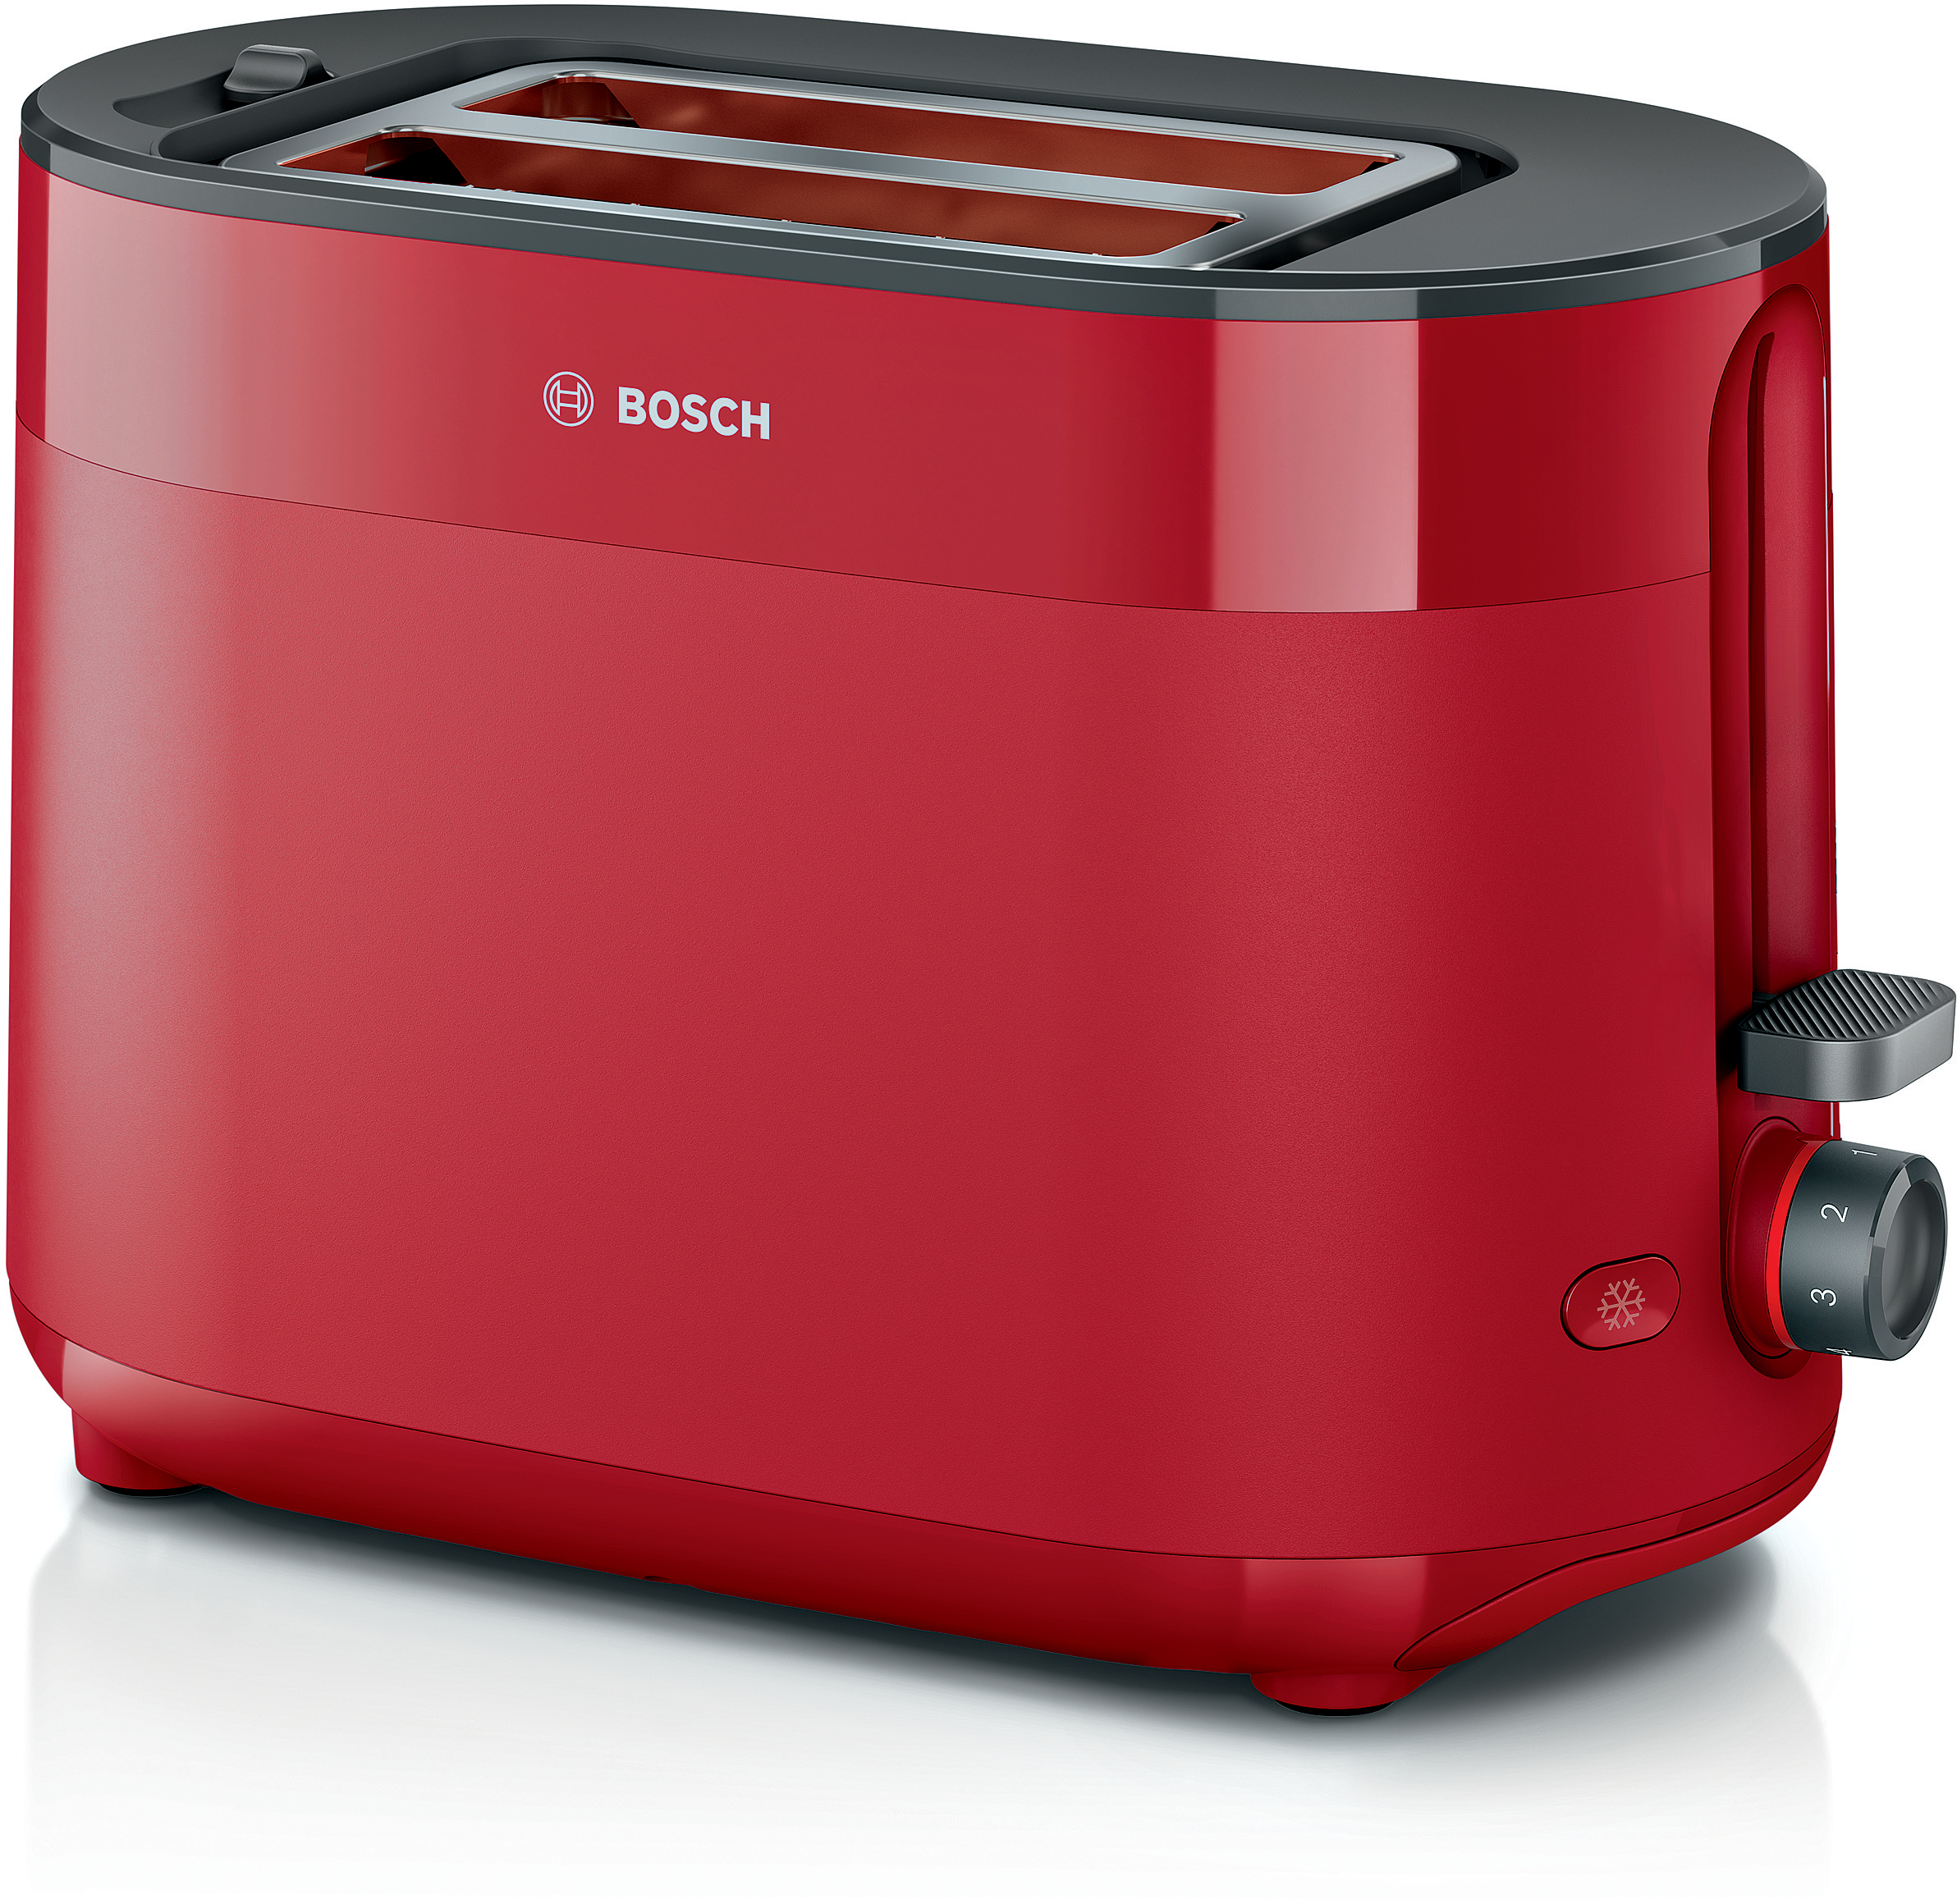 Bosch TAT2M124 MyMoment Kompakt Toaster,Rot 